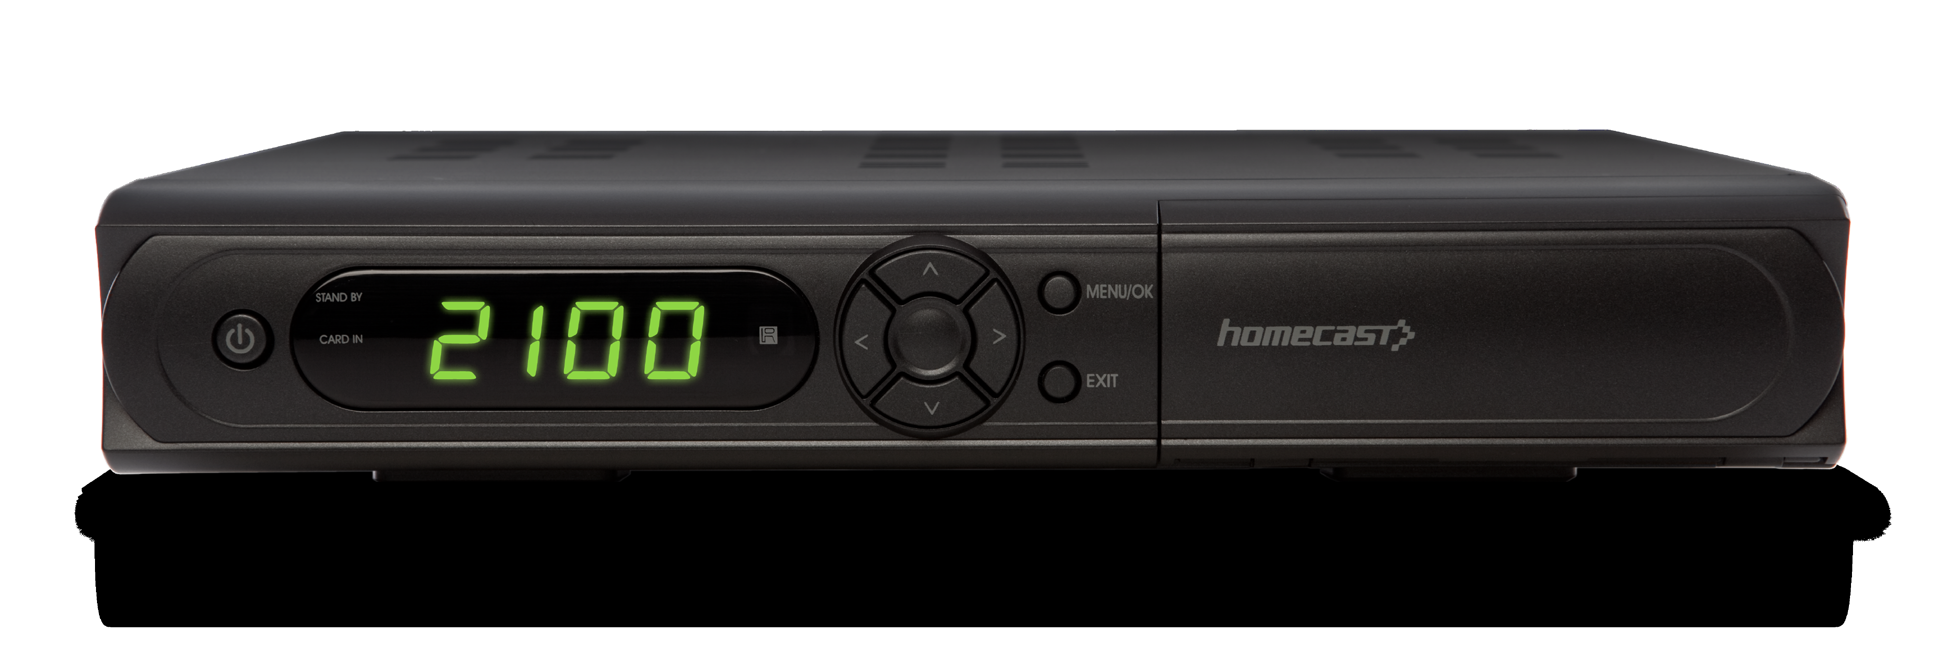 Homecast HS2100 CICD PVR-ready De kleine compacte Homecast HS2100 is een zeer Homecast HS2100 CICD PVR-ready praktische en compacte ontvanger.